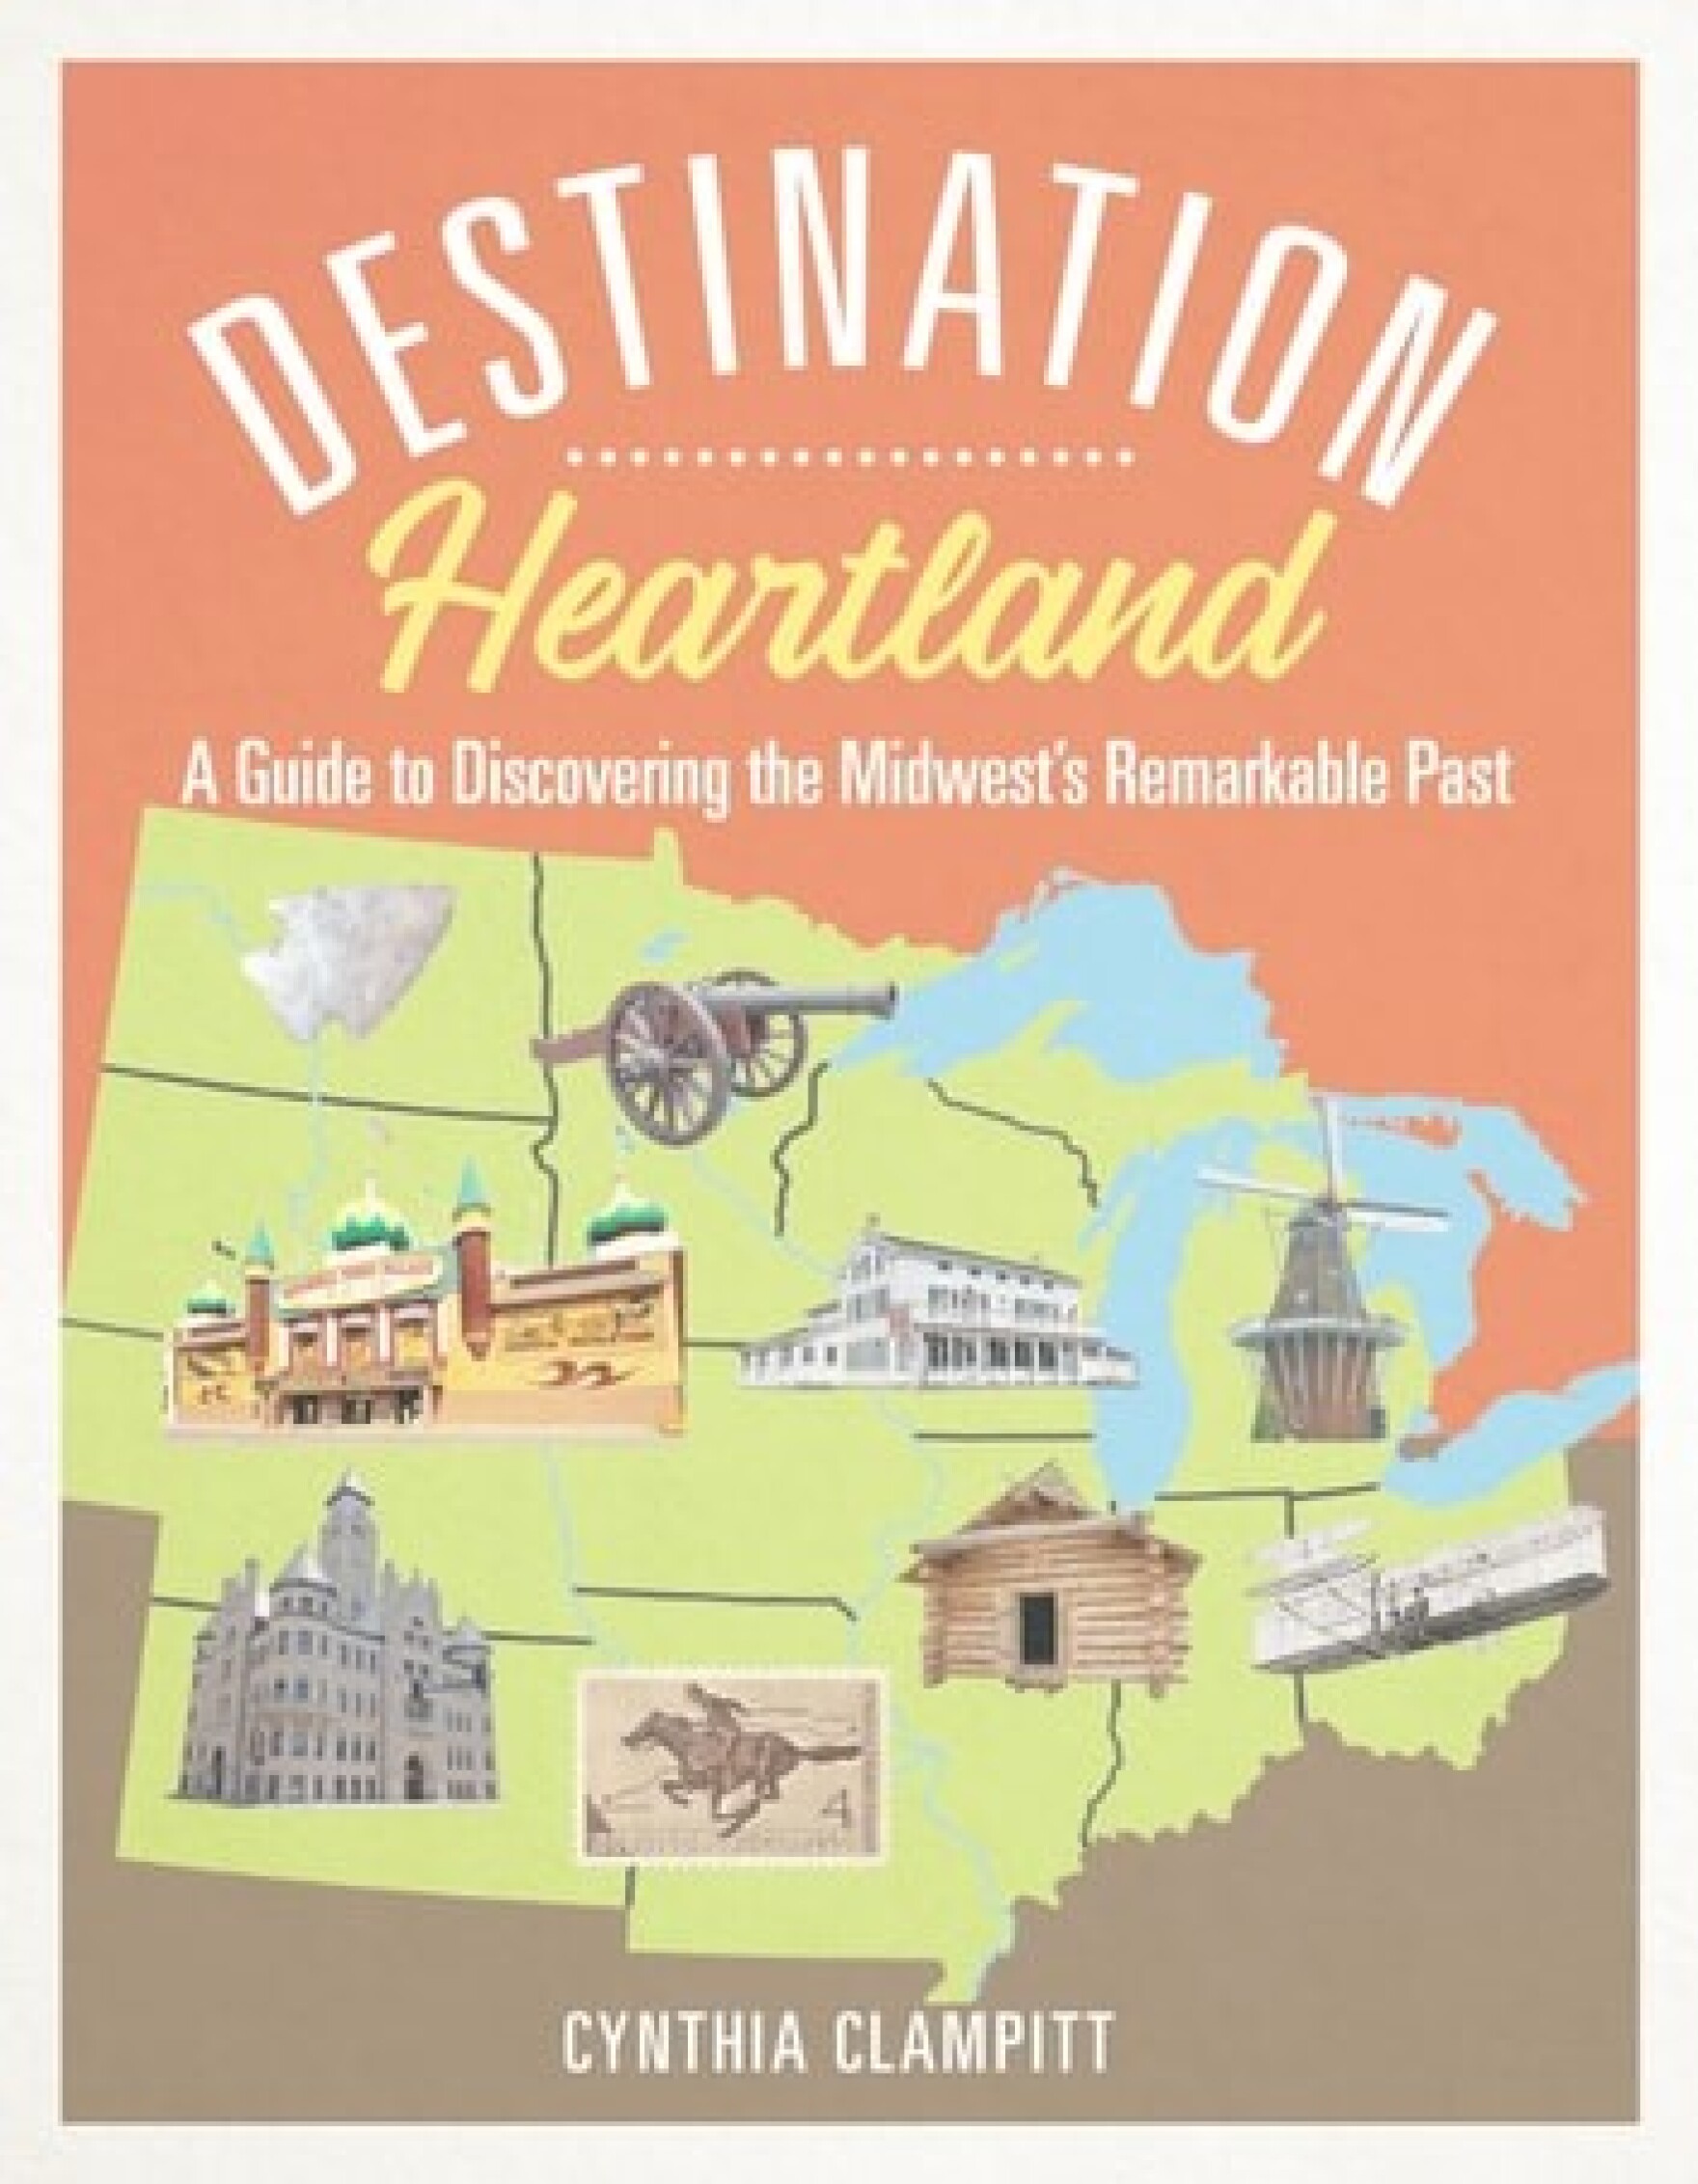 Destination Heartland by Cynthia Clampitt